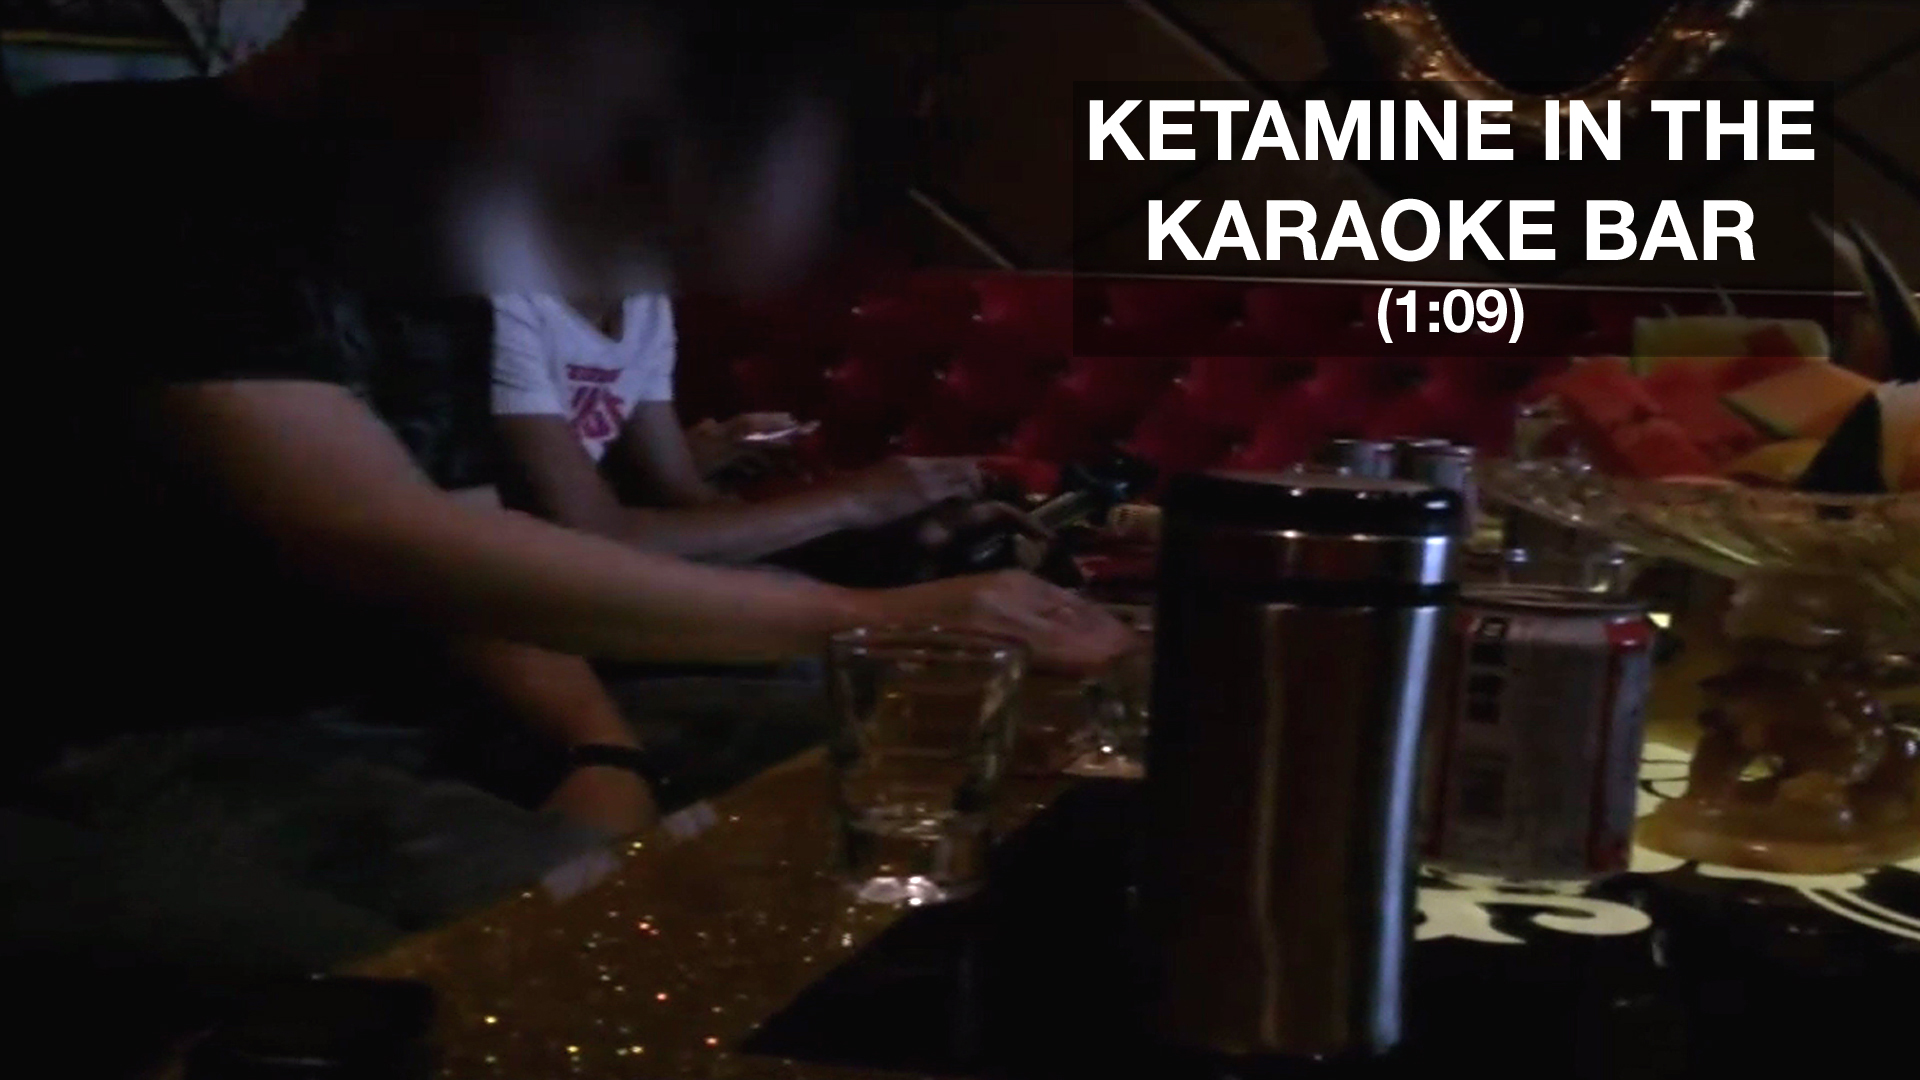 Taking Ketamine in a Chinese karaoke bar